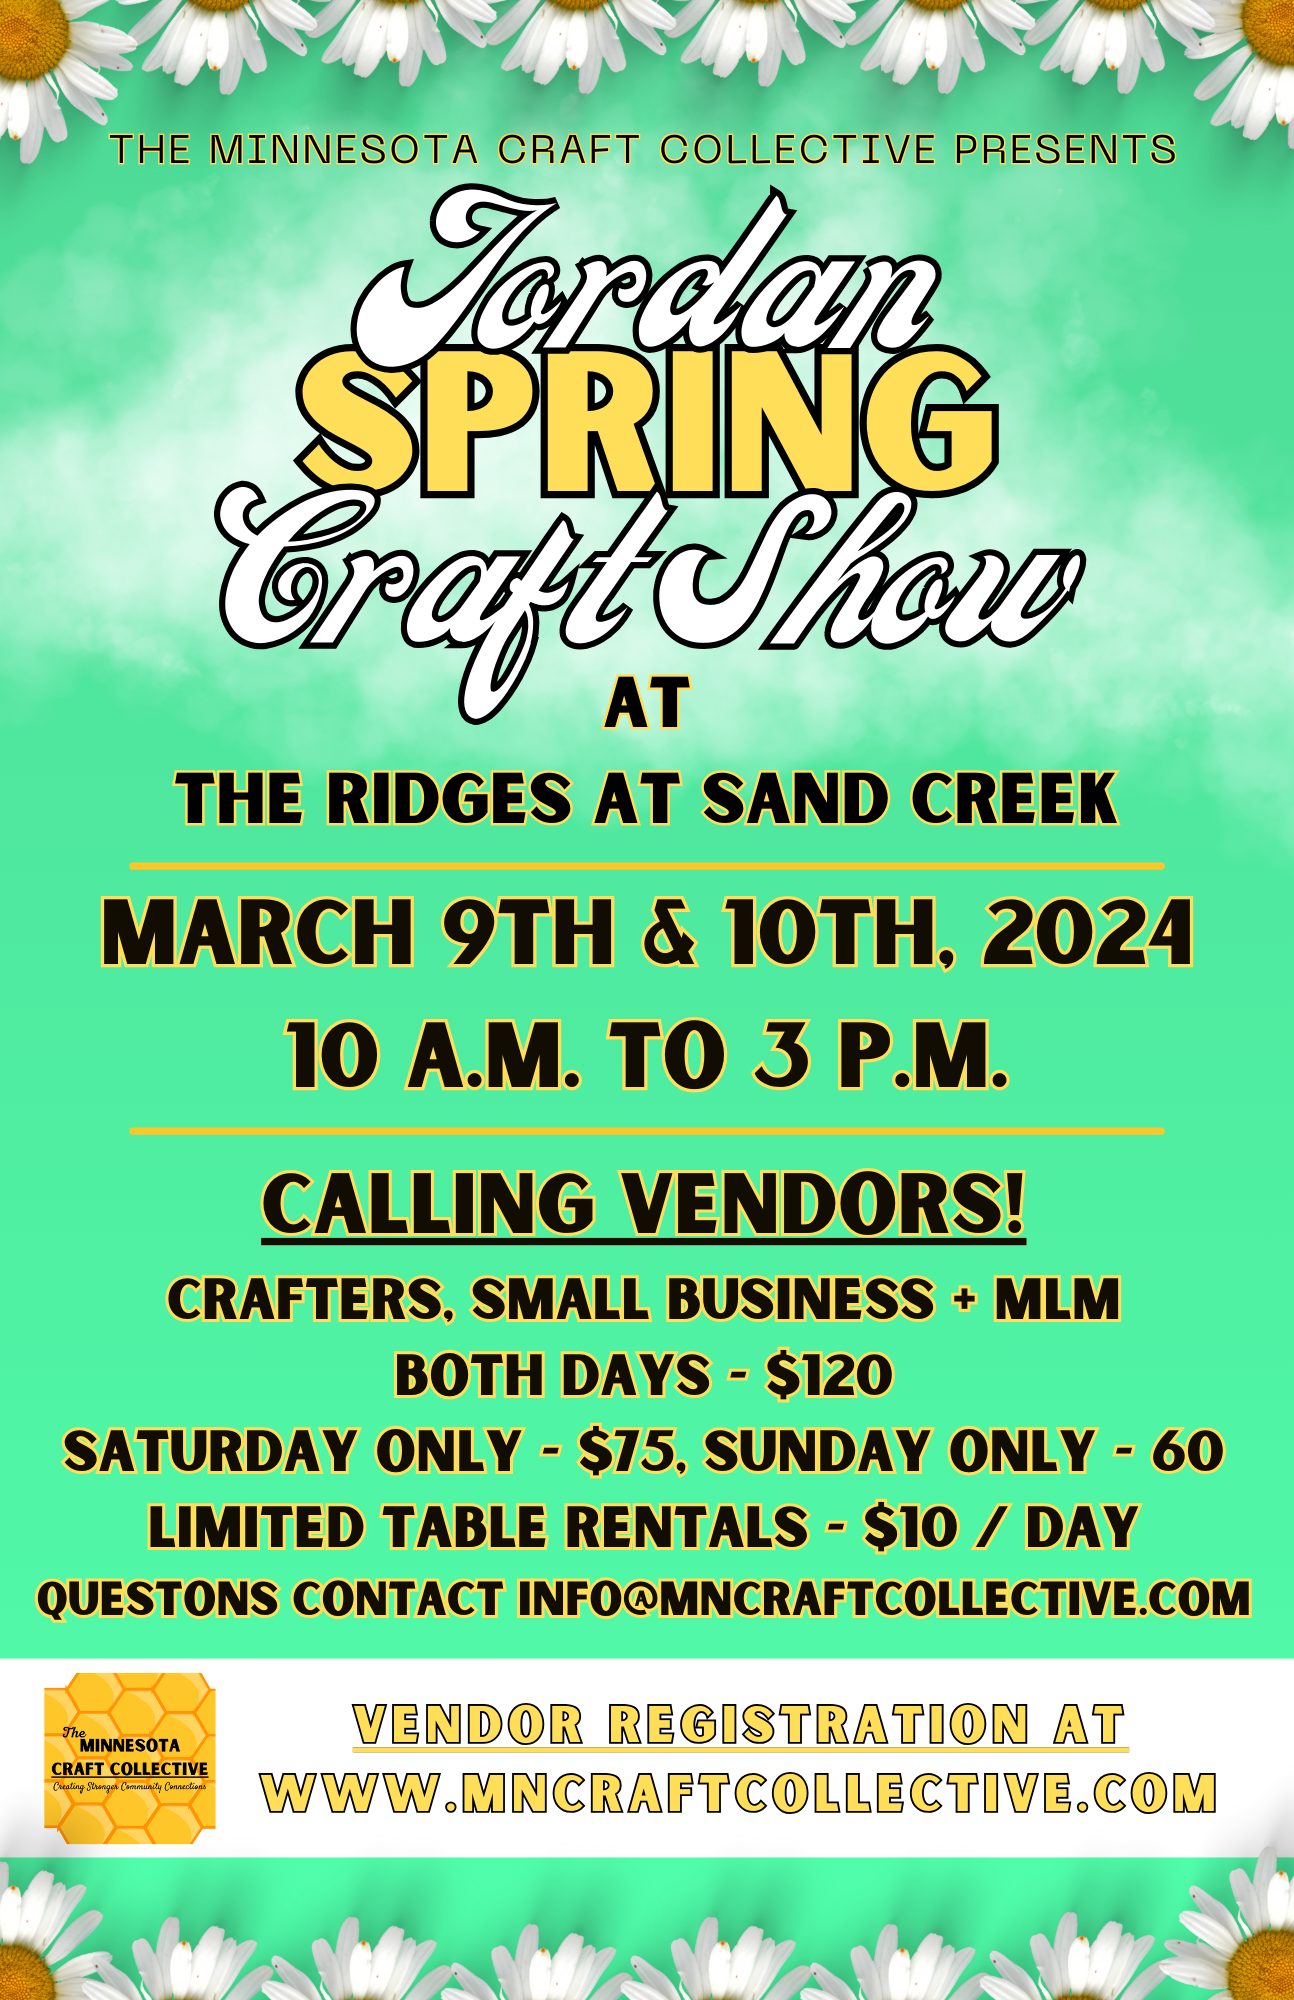 March 9th & 10th, 2024 - Jordan Spring Craft Show